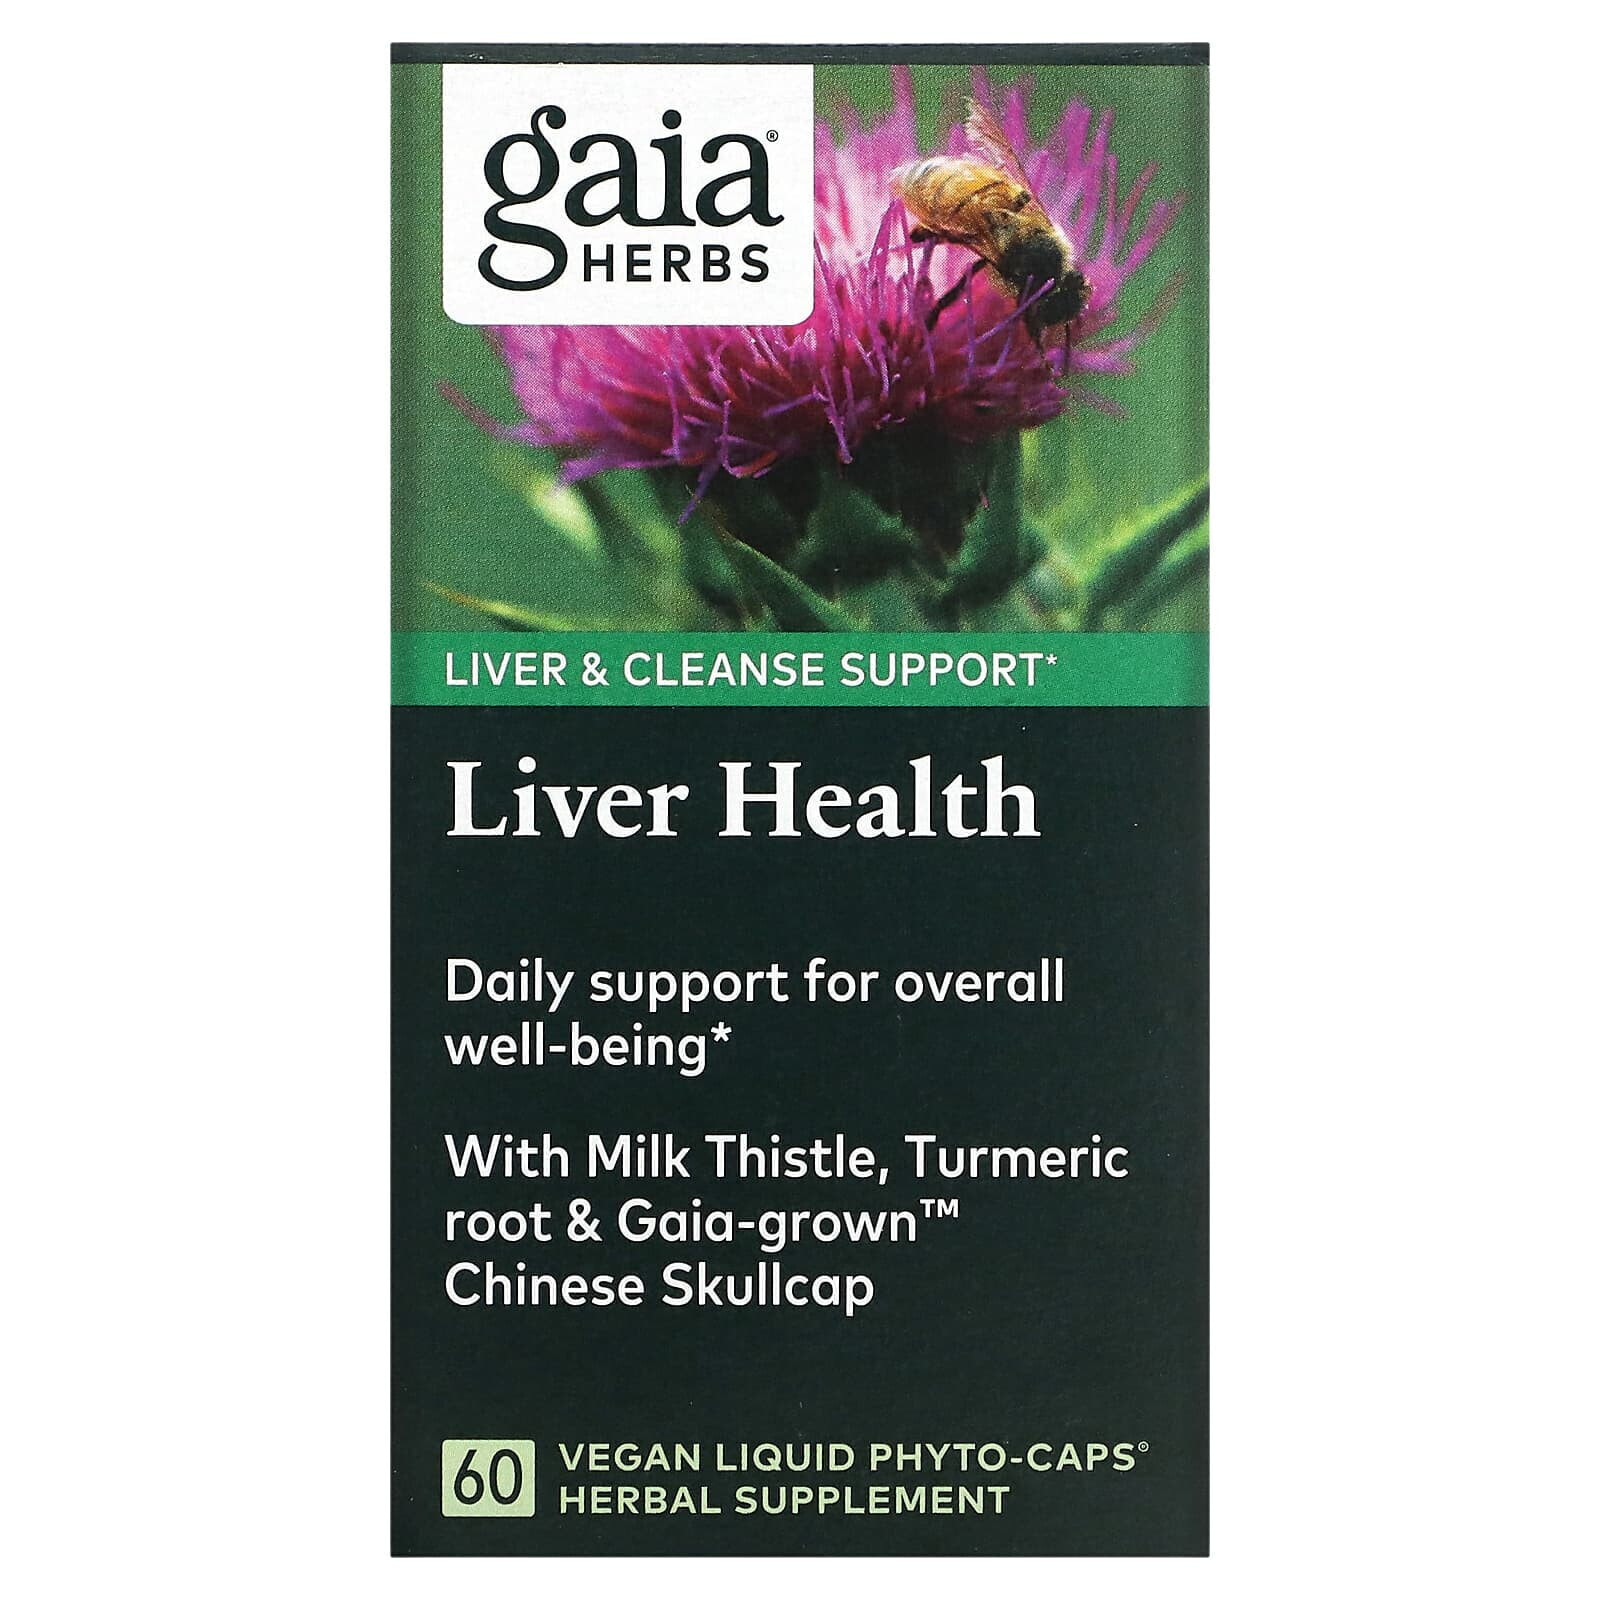 Liver Health, 60 Vegan Liquid Phyto-Caps